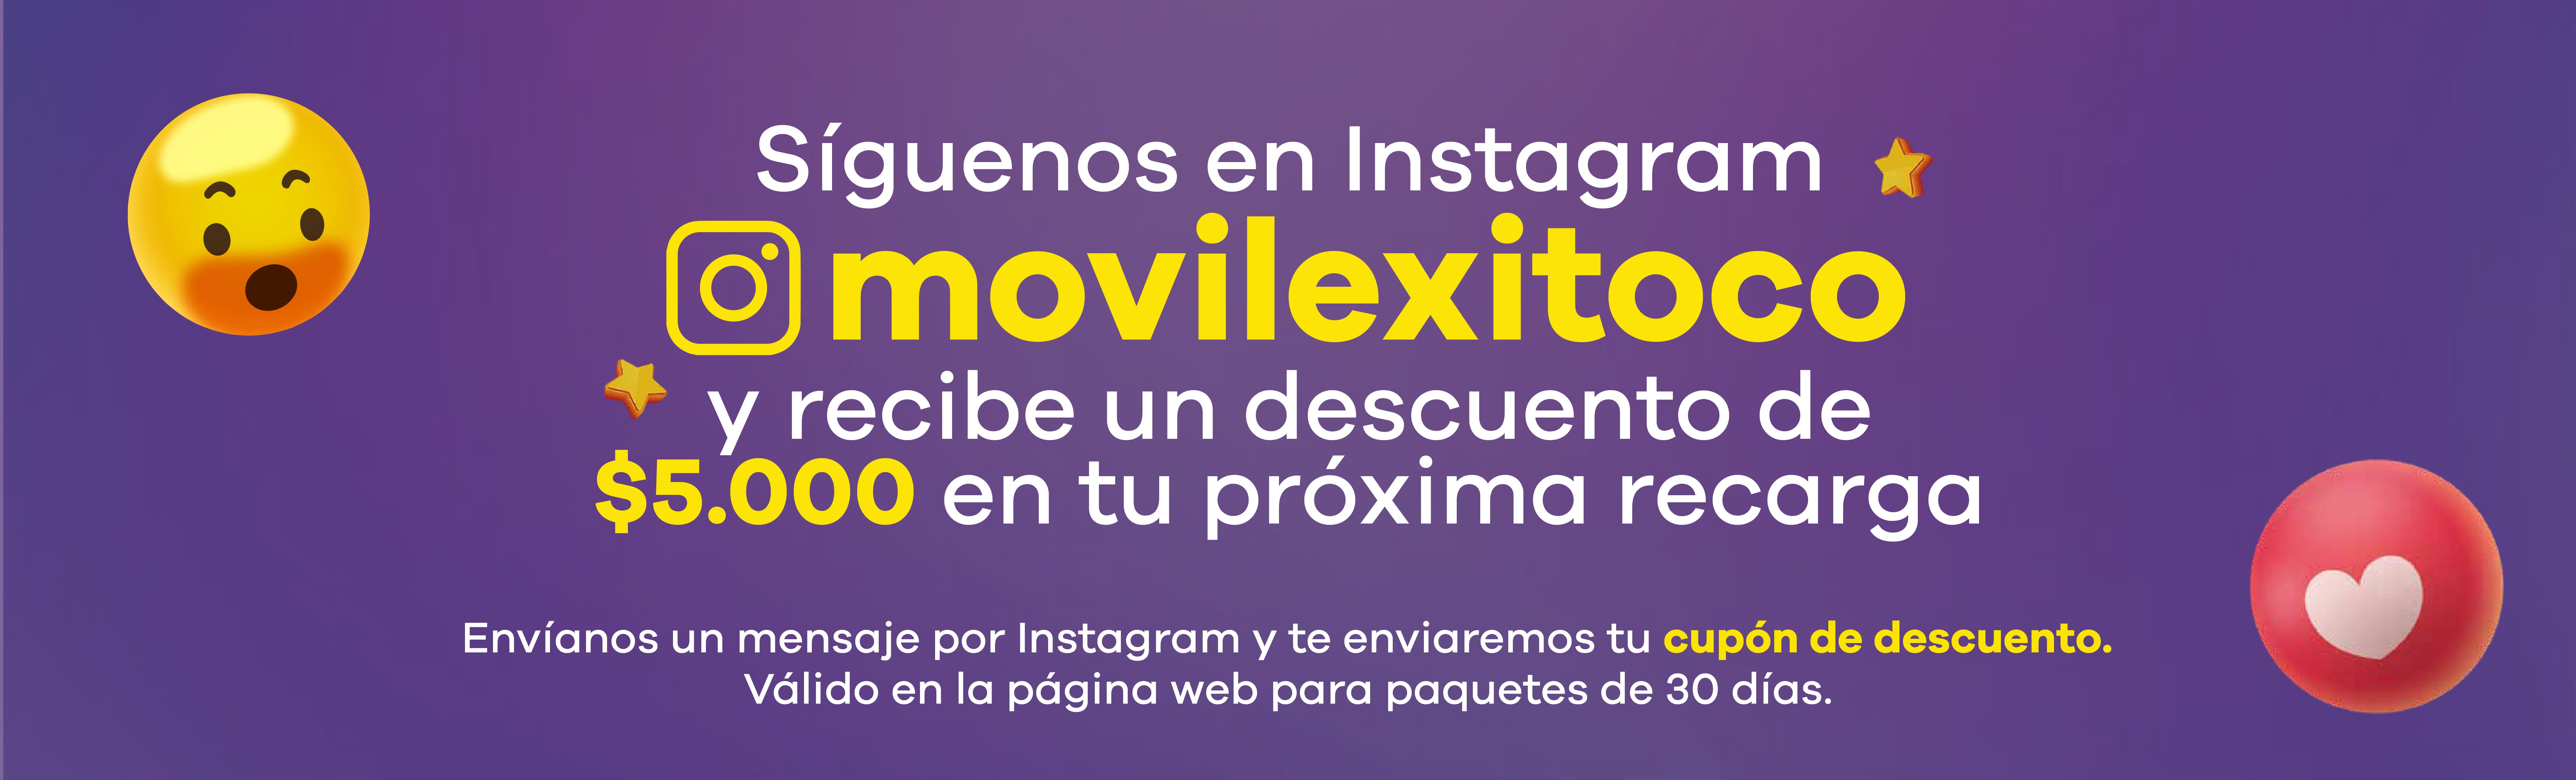 Banner Concurso Instagram Mobile